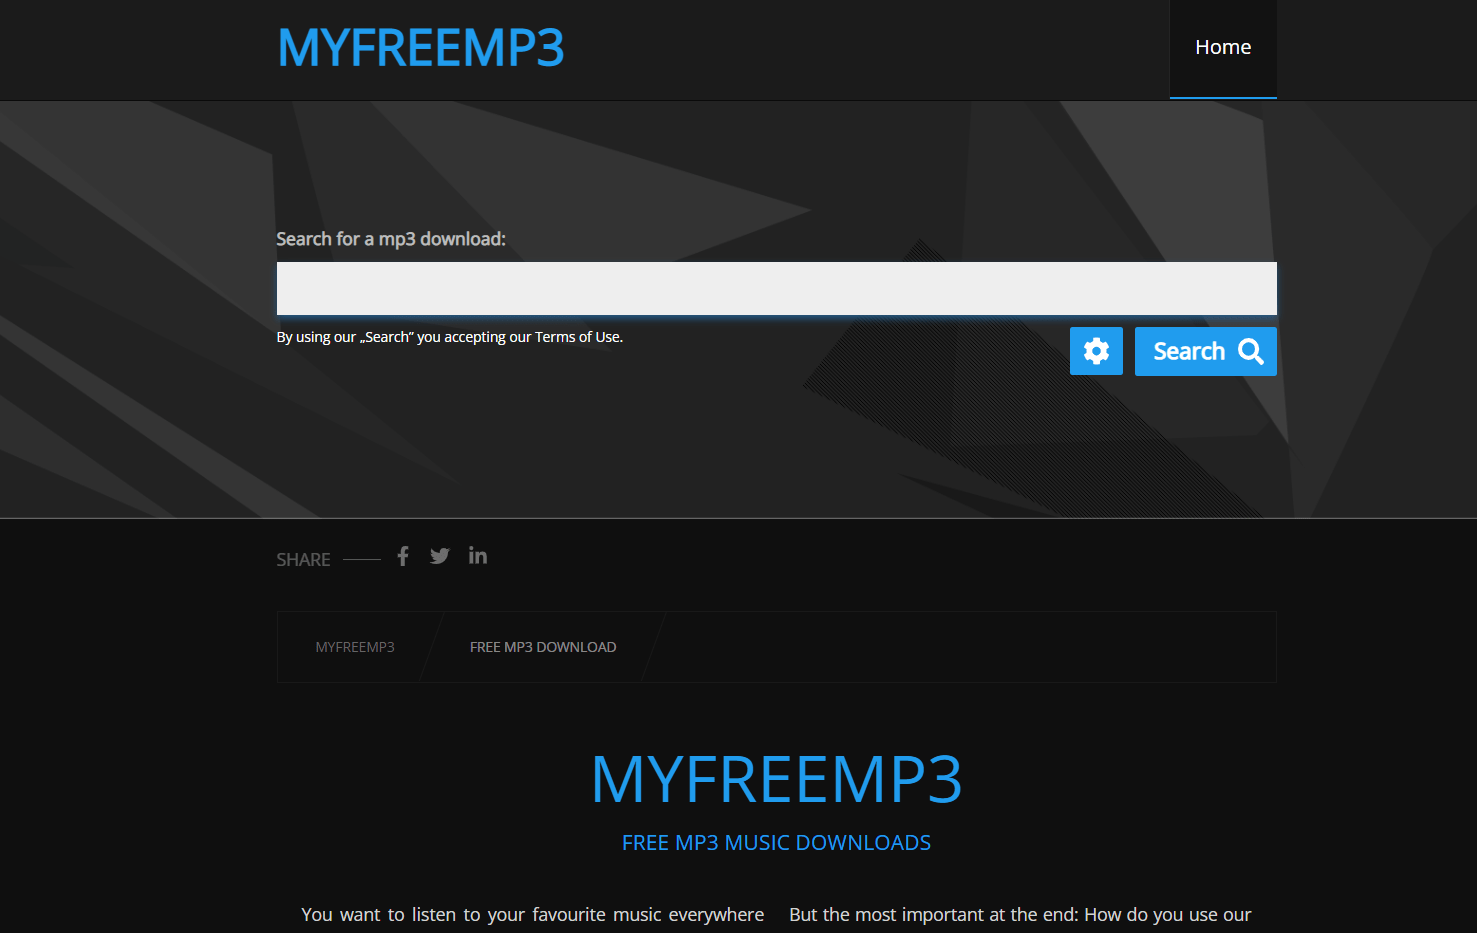 Myfreemp3